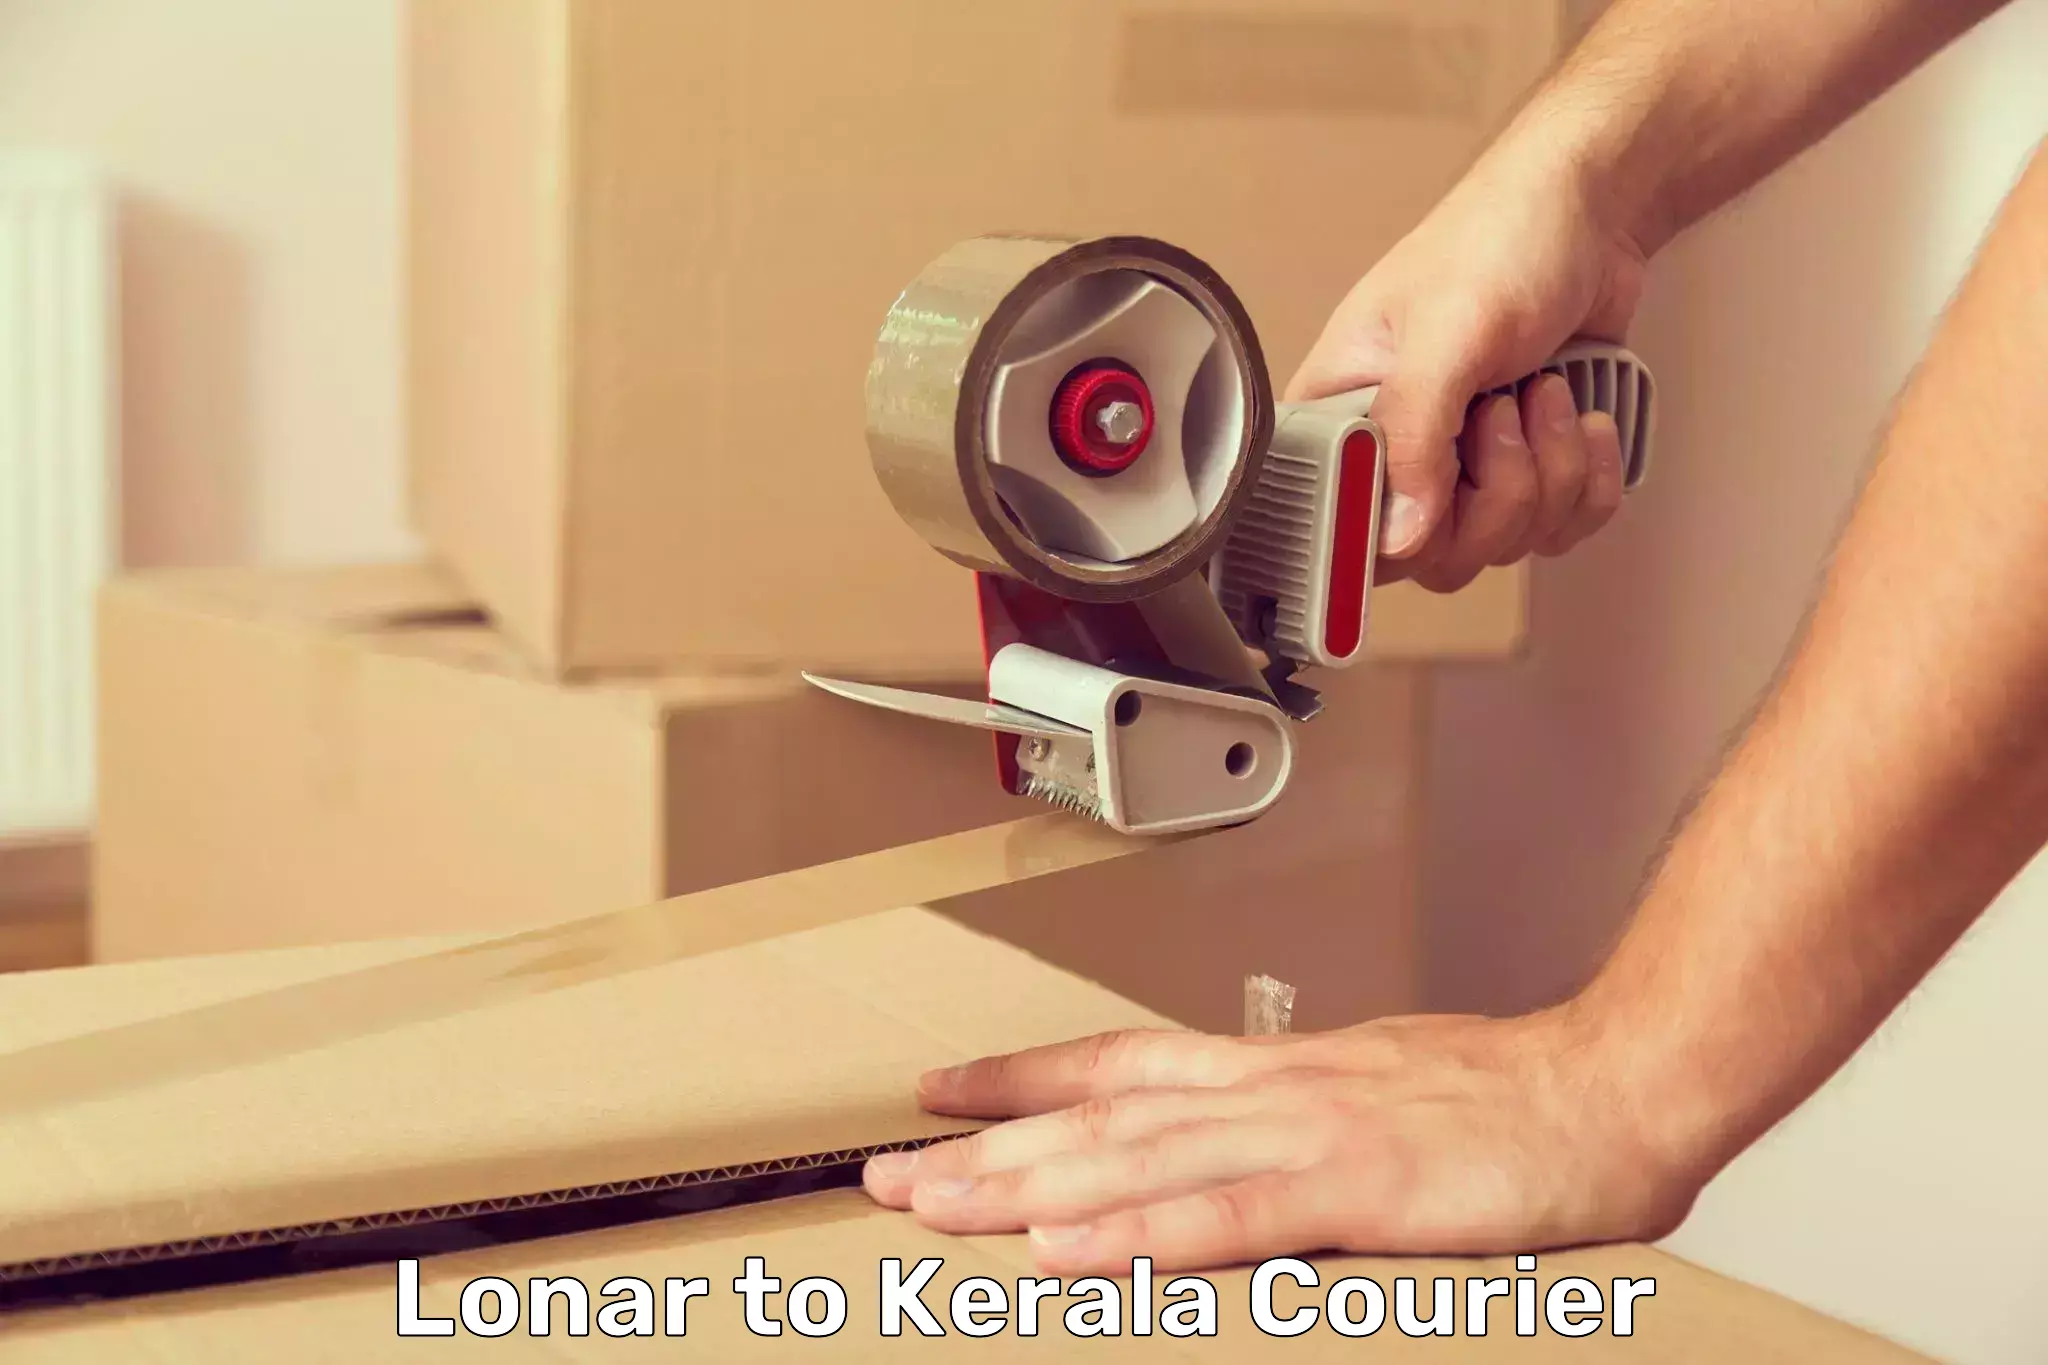 Courier app Lonar to Kerala